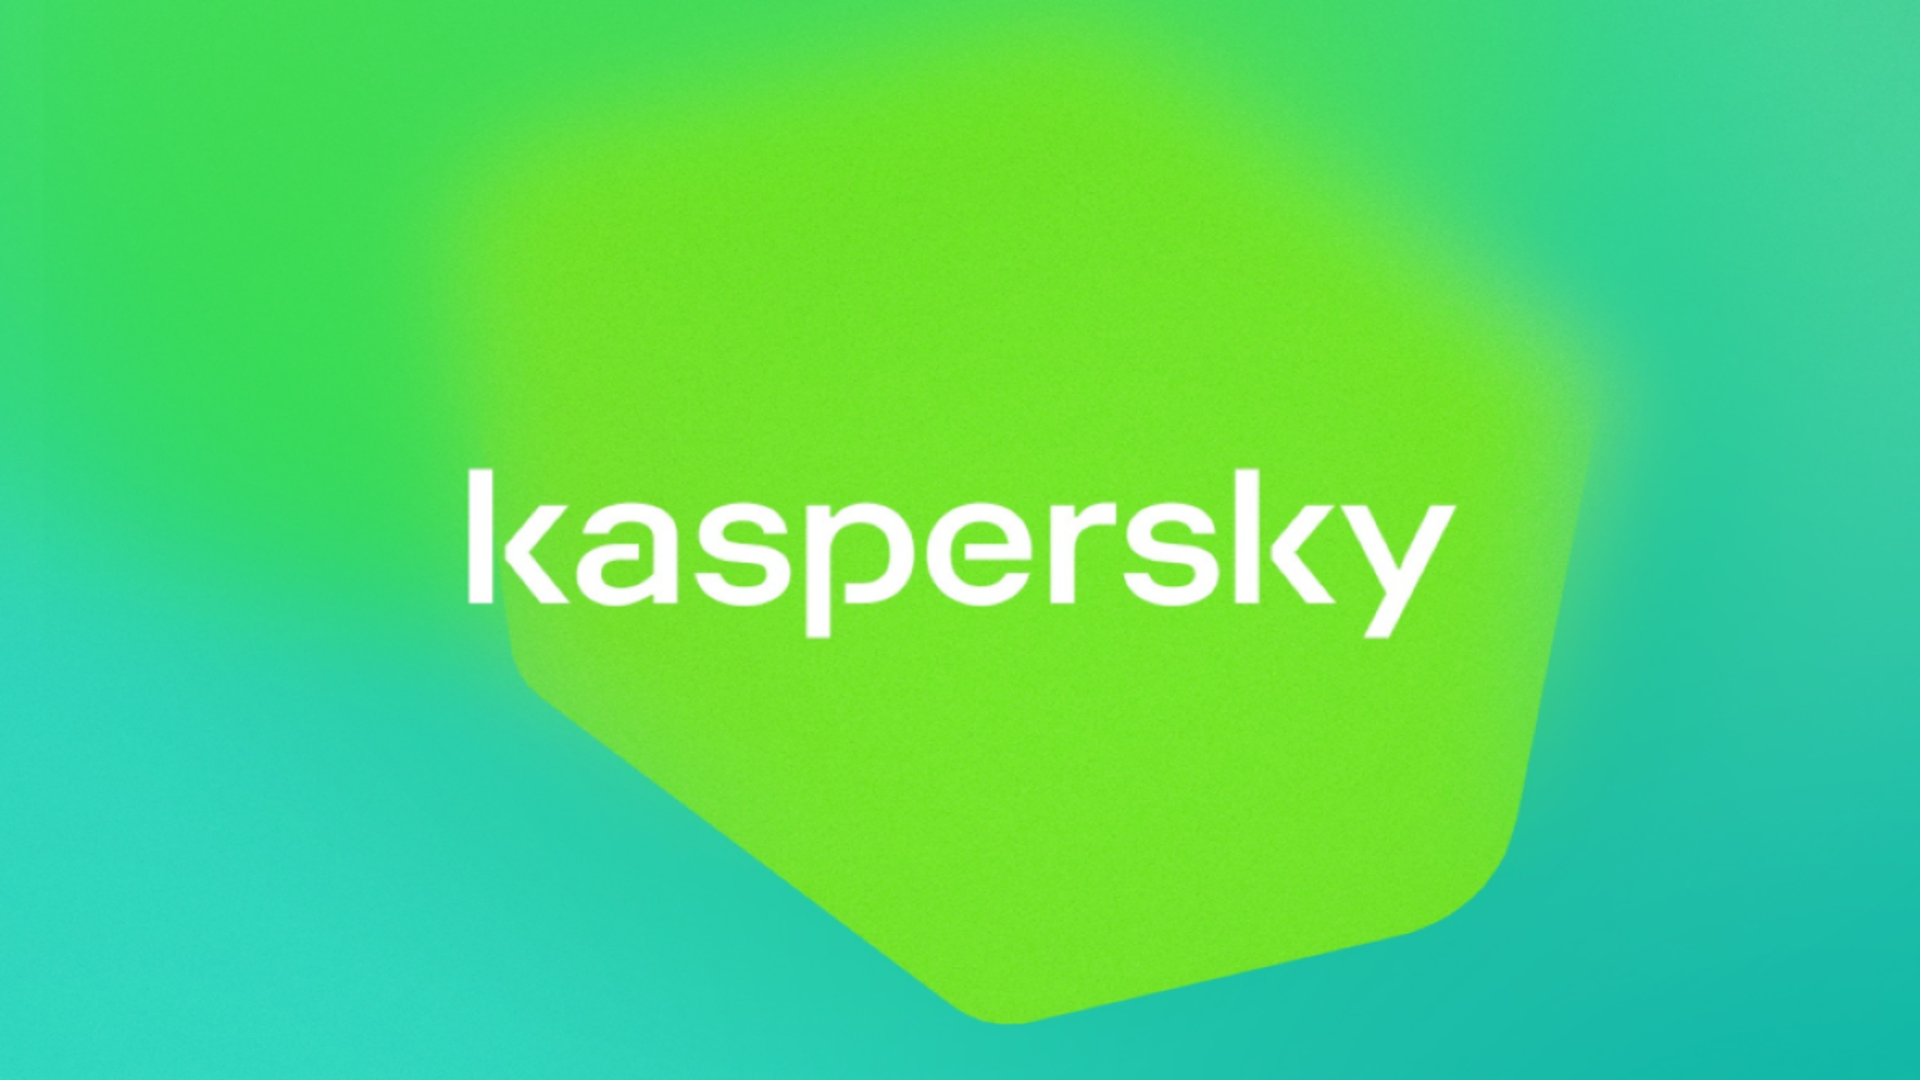 UpdateStar News. New Kaspersky 2021 adds new functionality